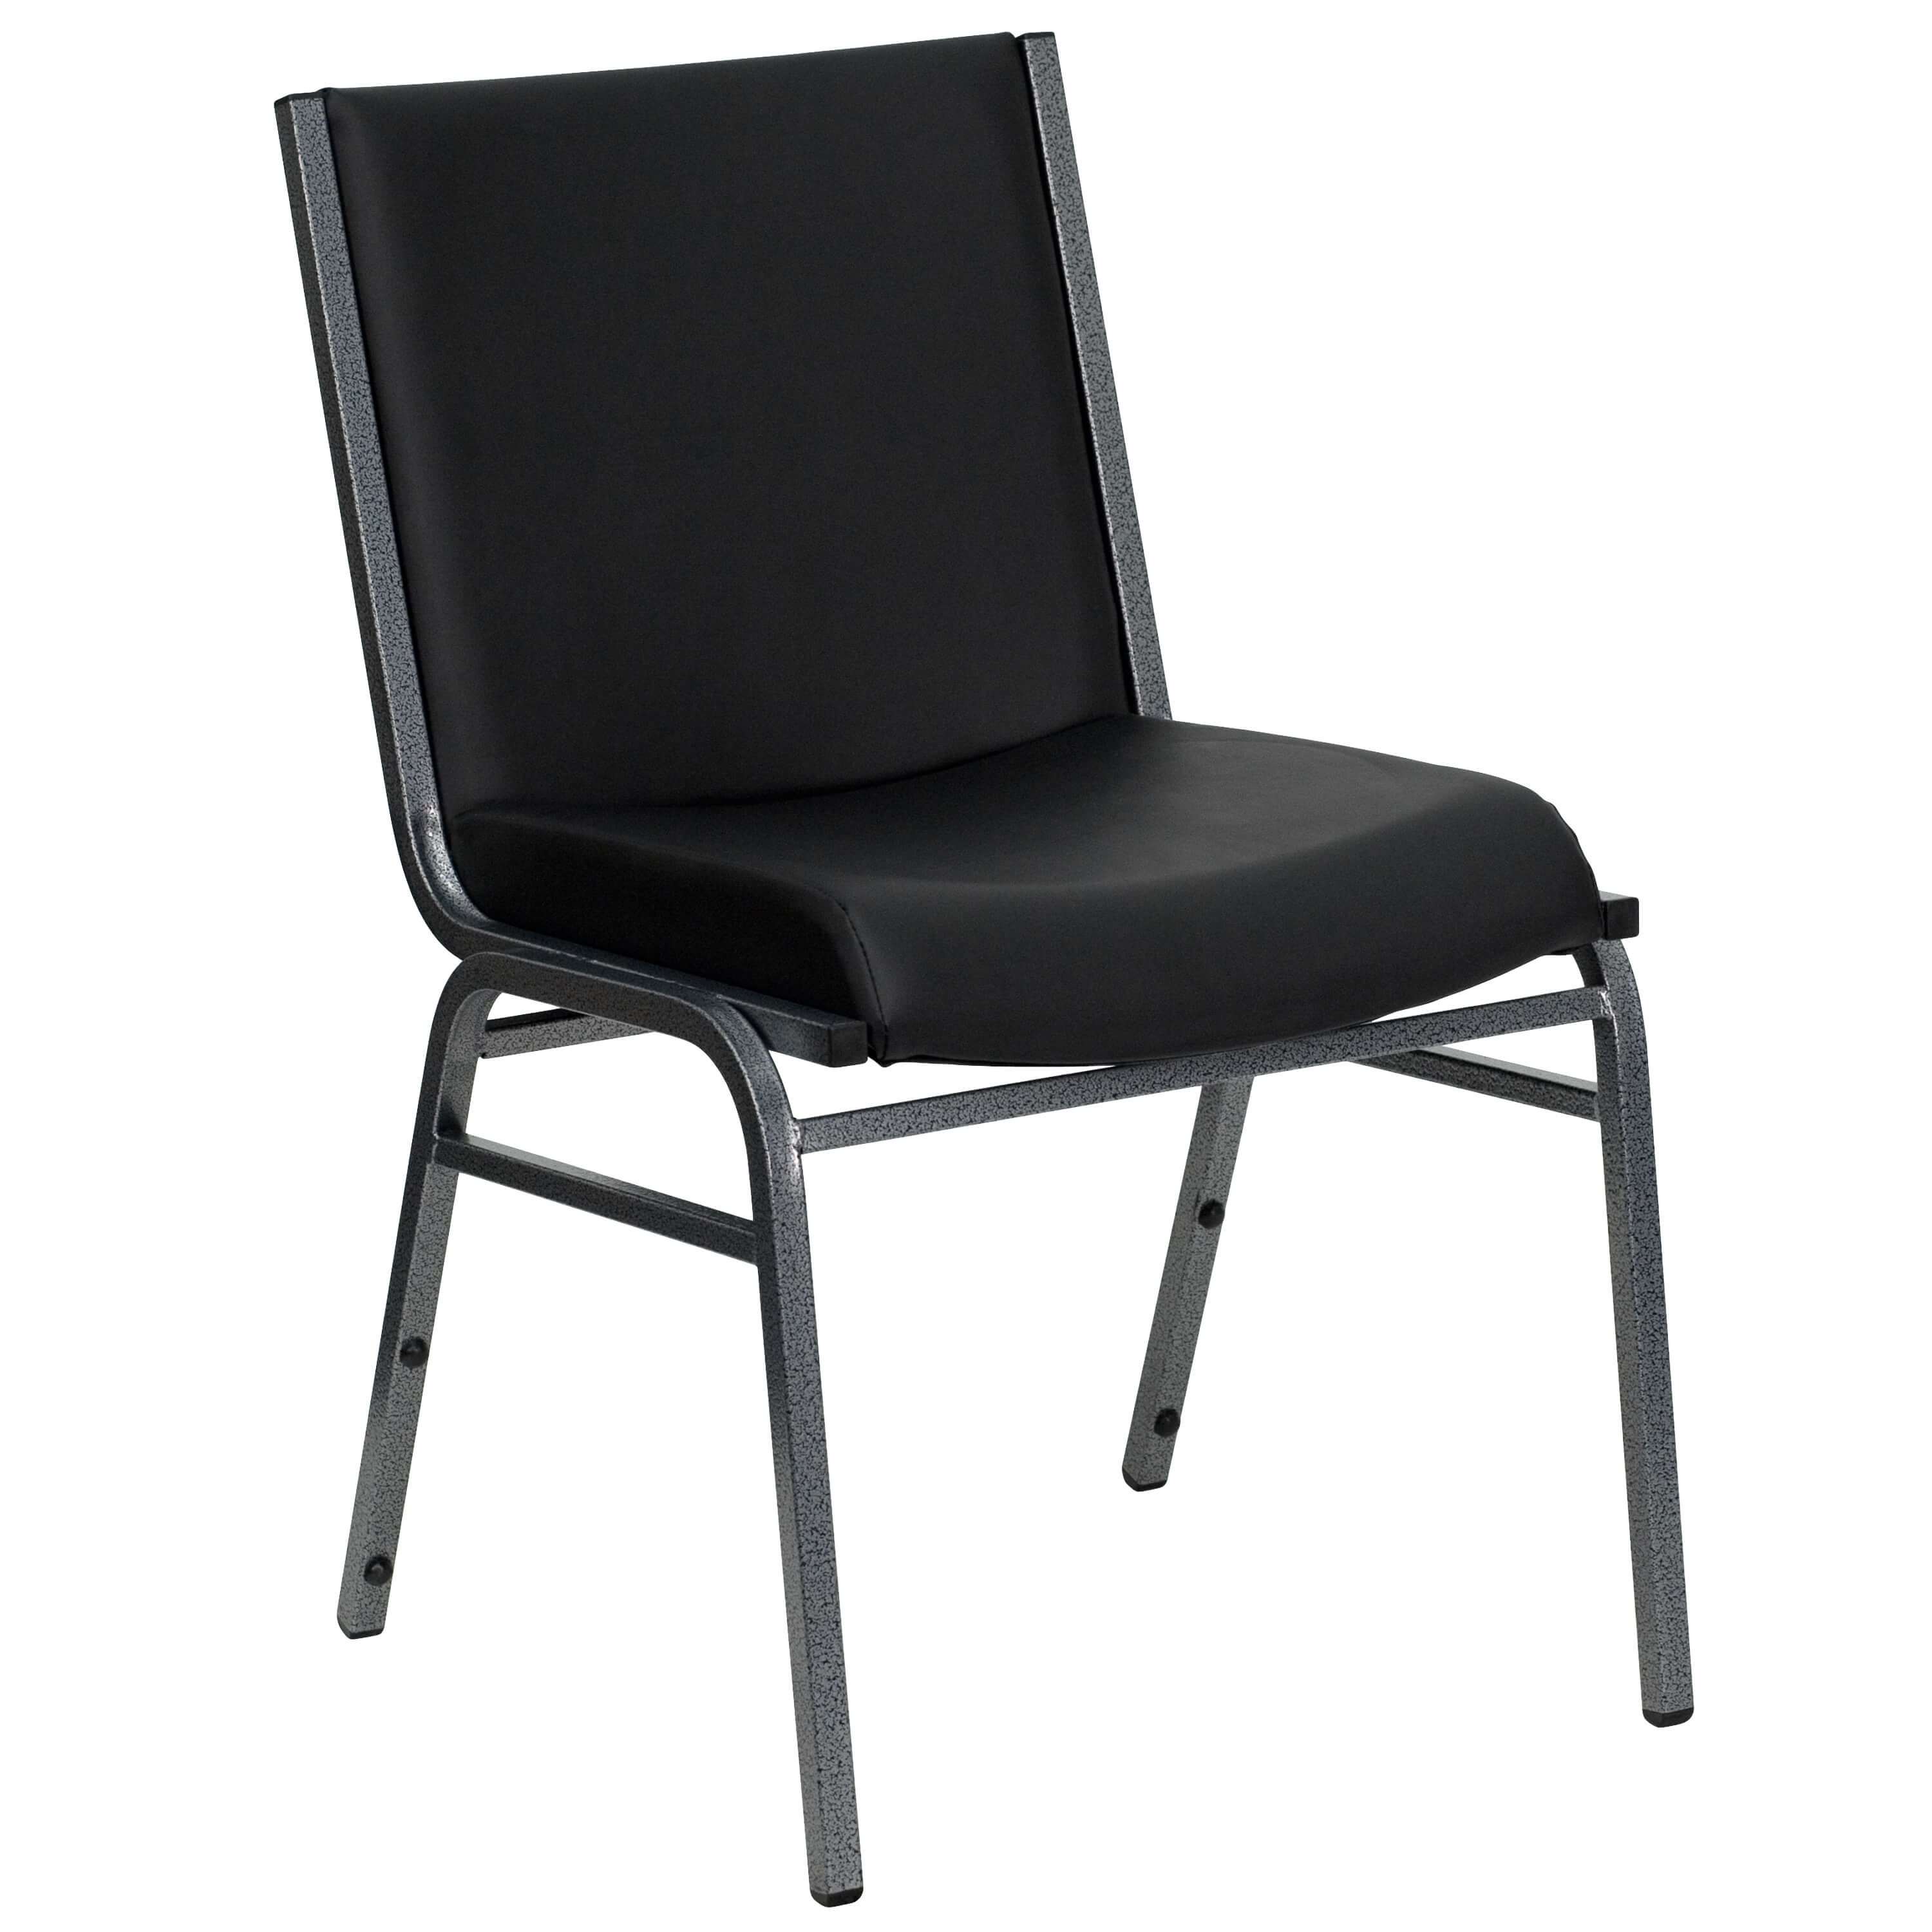 Stackable chairs CUB XU 60153 BK VYL GG FLA